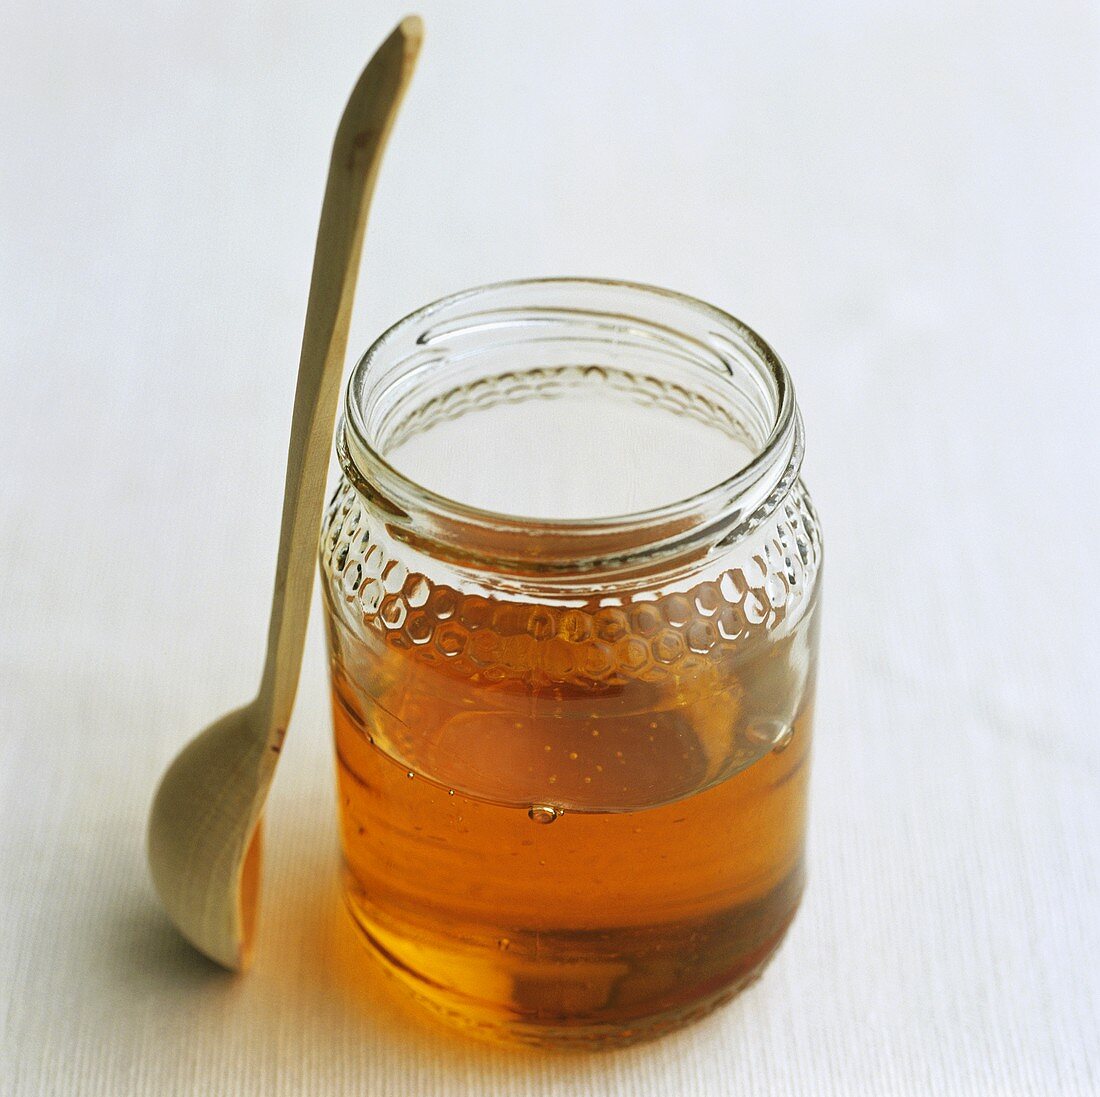 Honigglas mit Holzlöffel